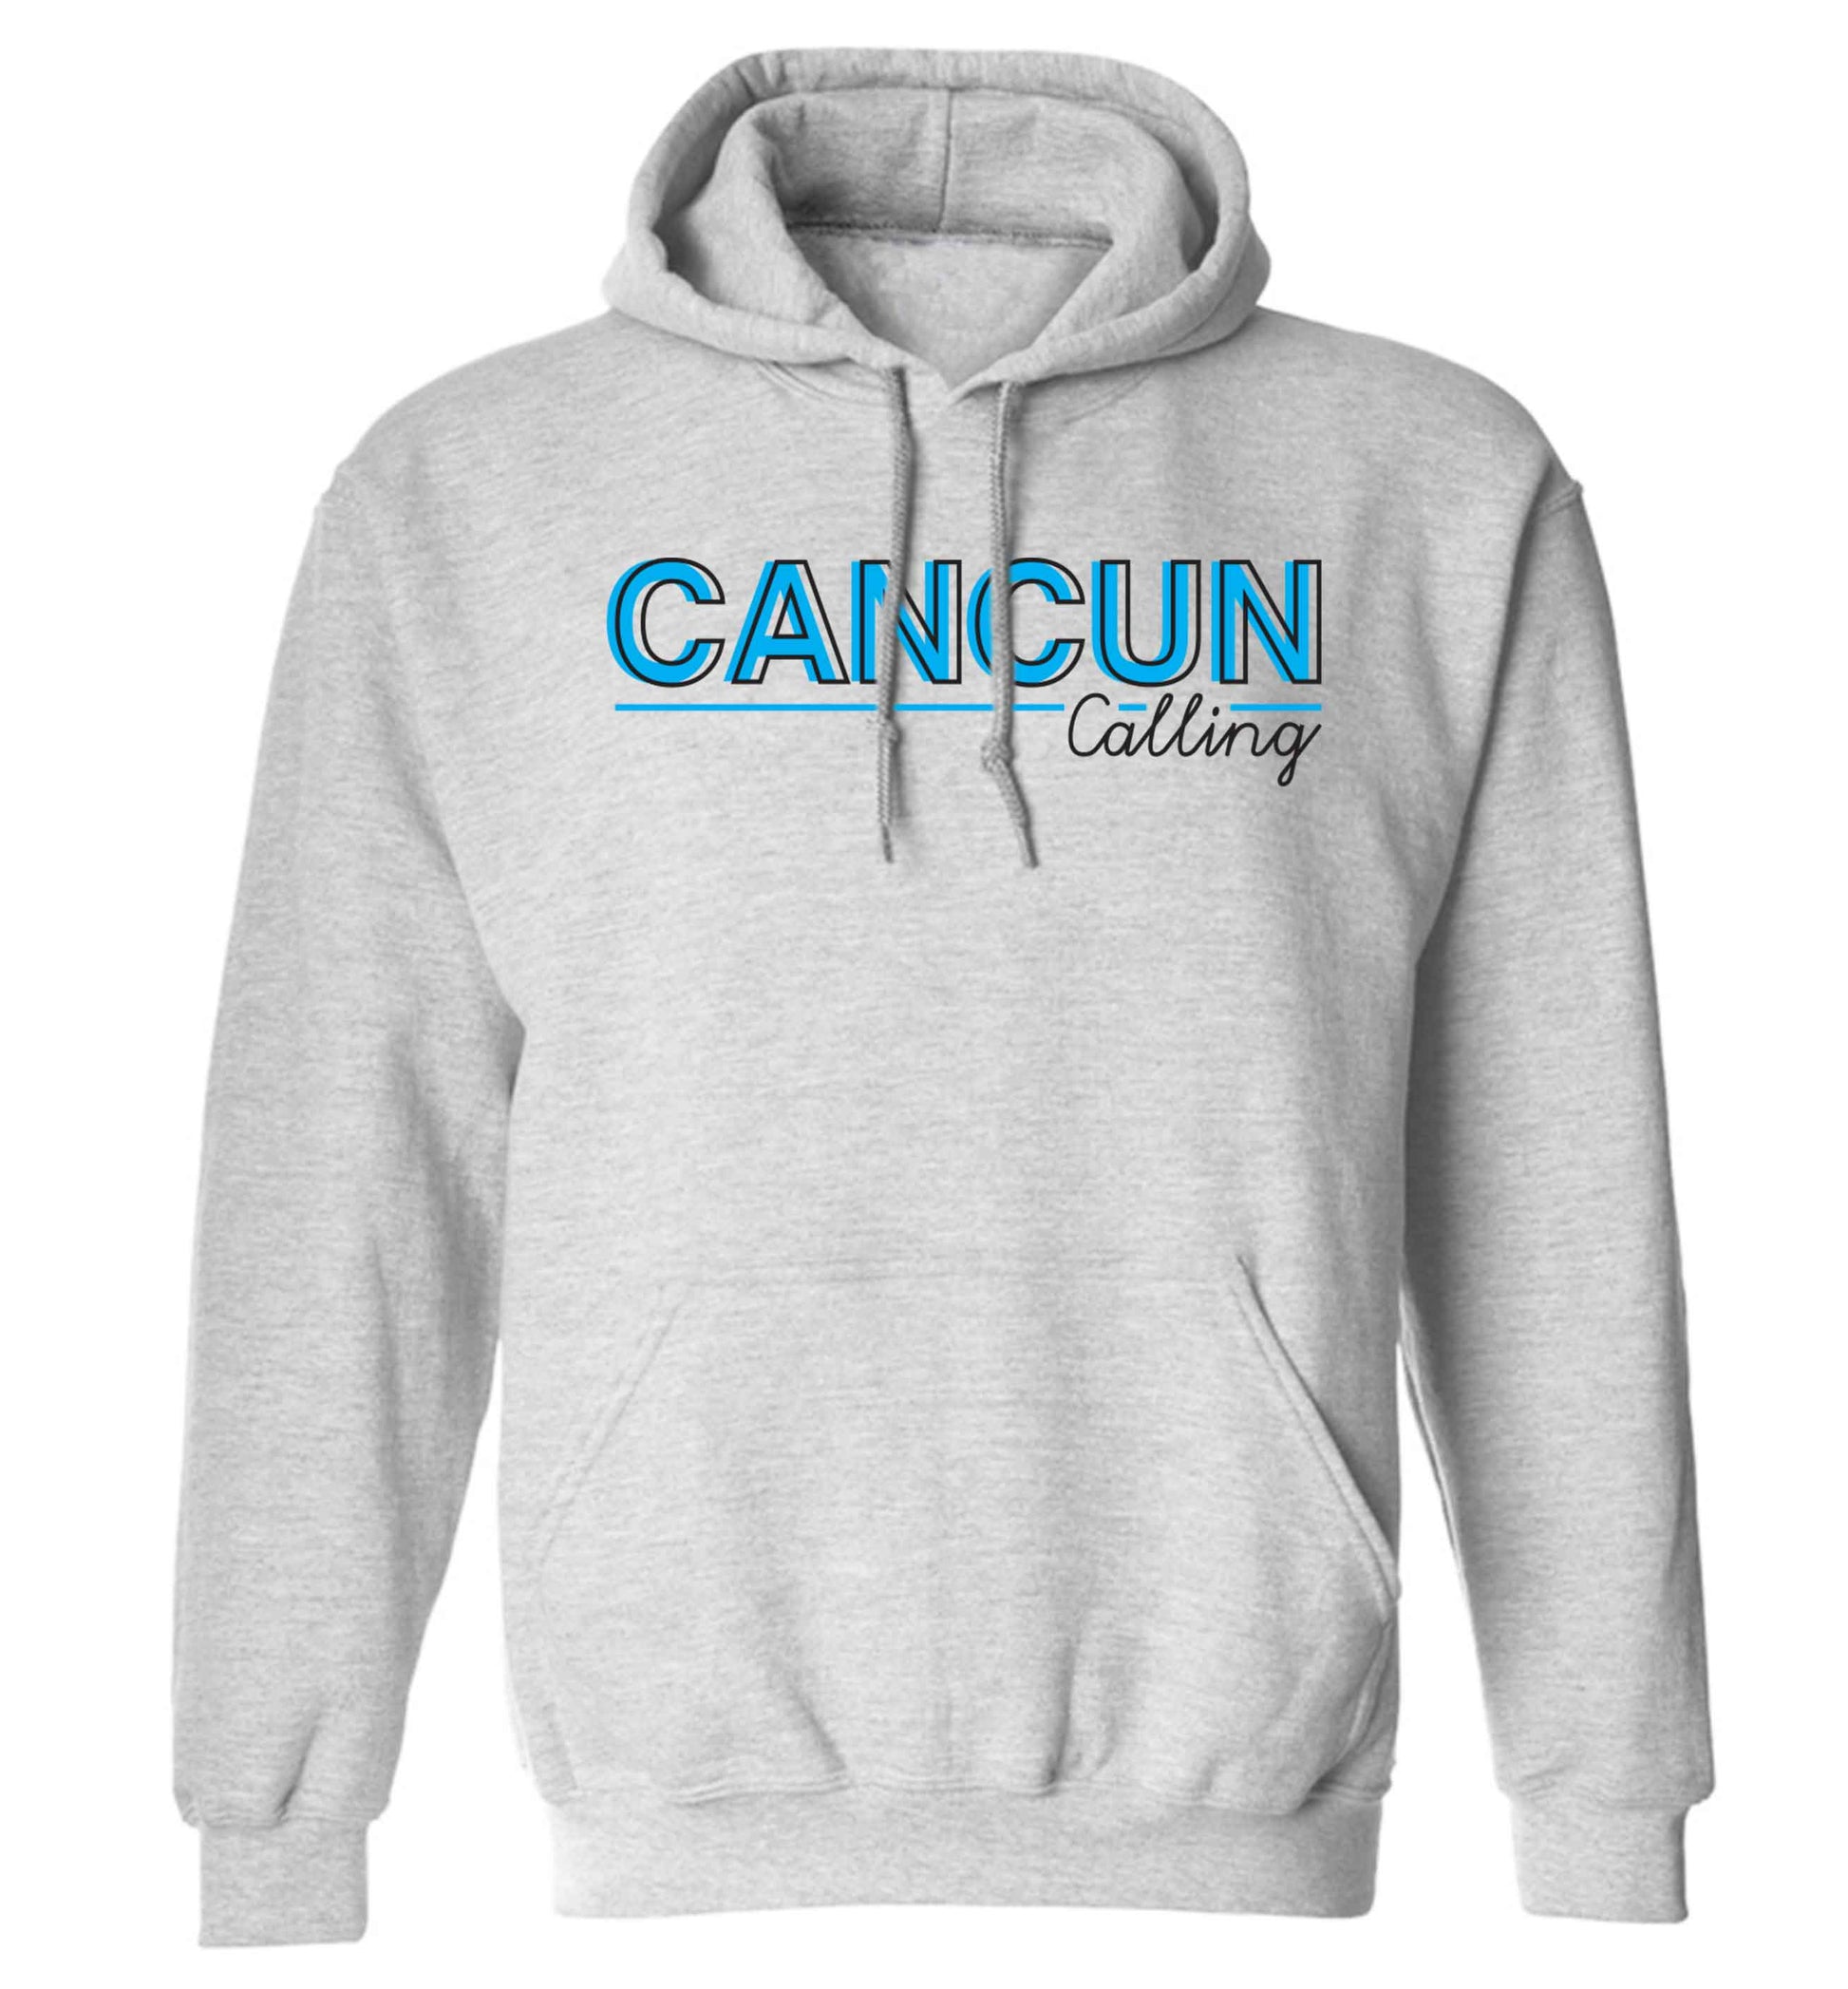 Cancun calling adults unisex grey hoodie 2XL